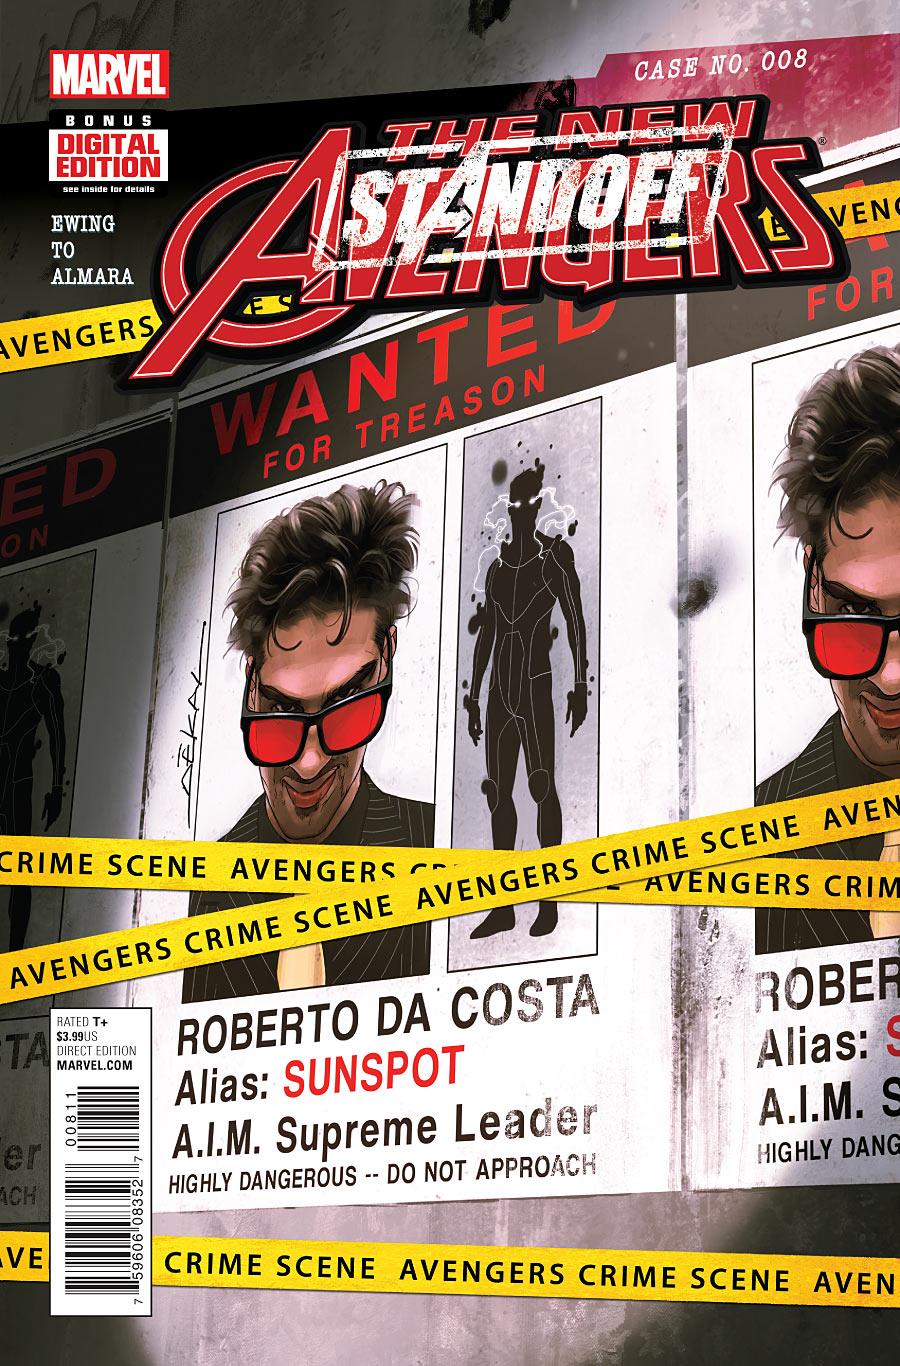 New Avengers Vol. 4 #8